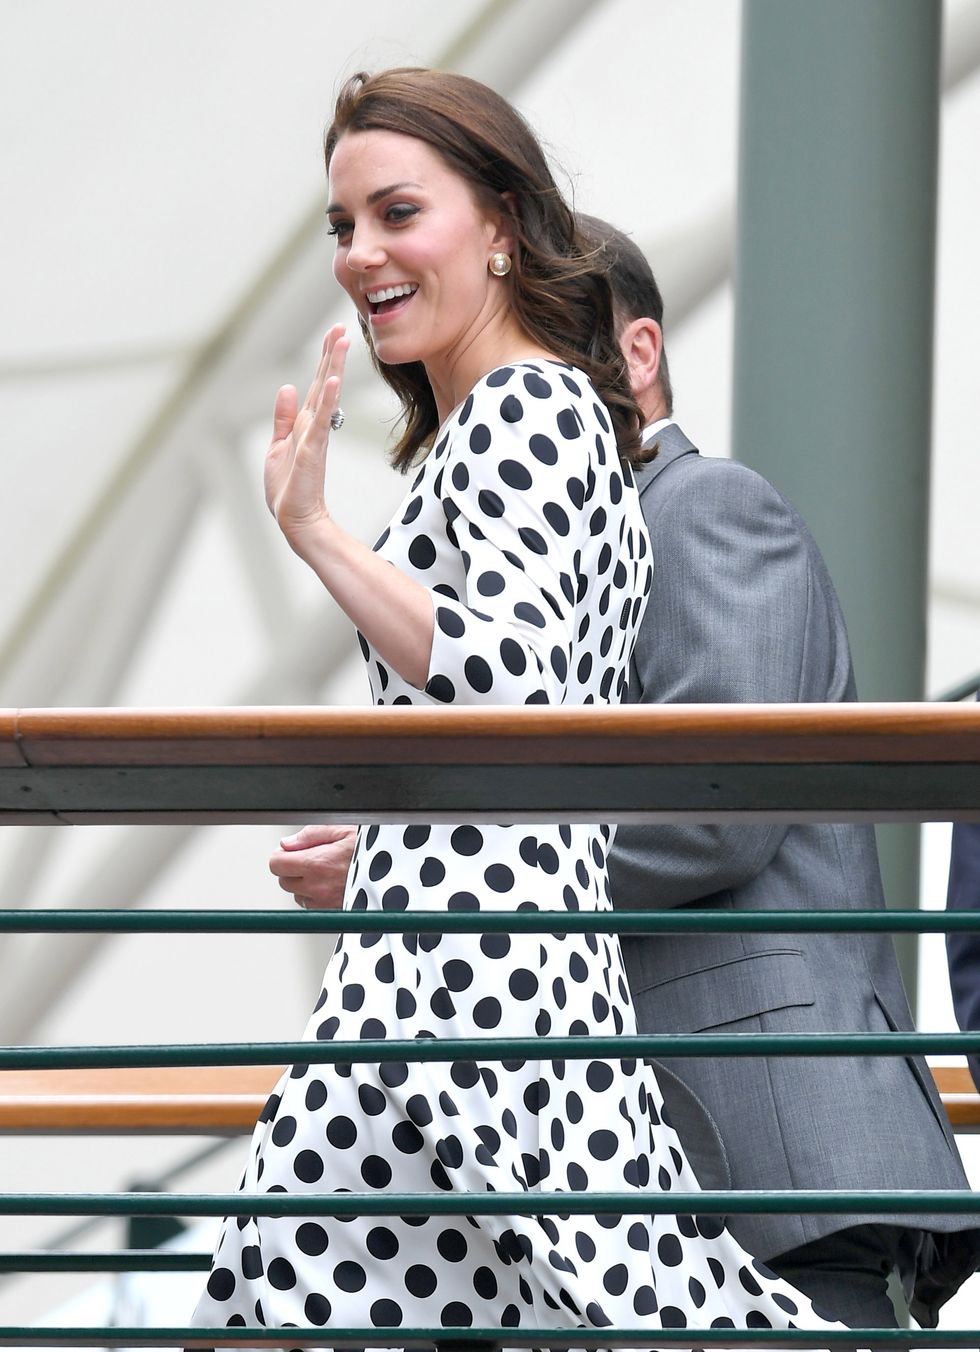 Kate Middleton Dolce & Gabbana polka dot dress